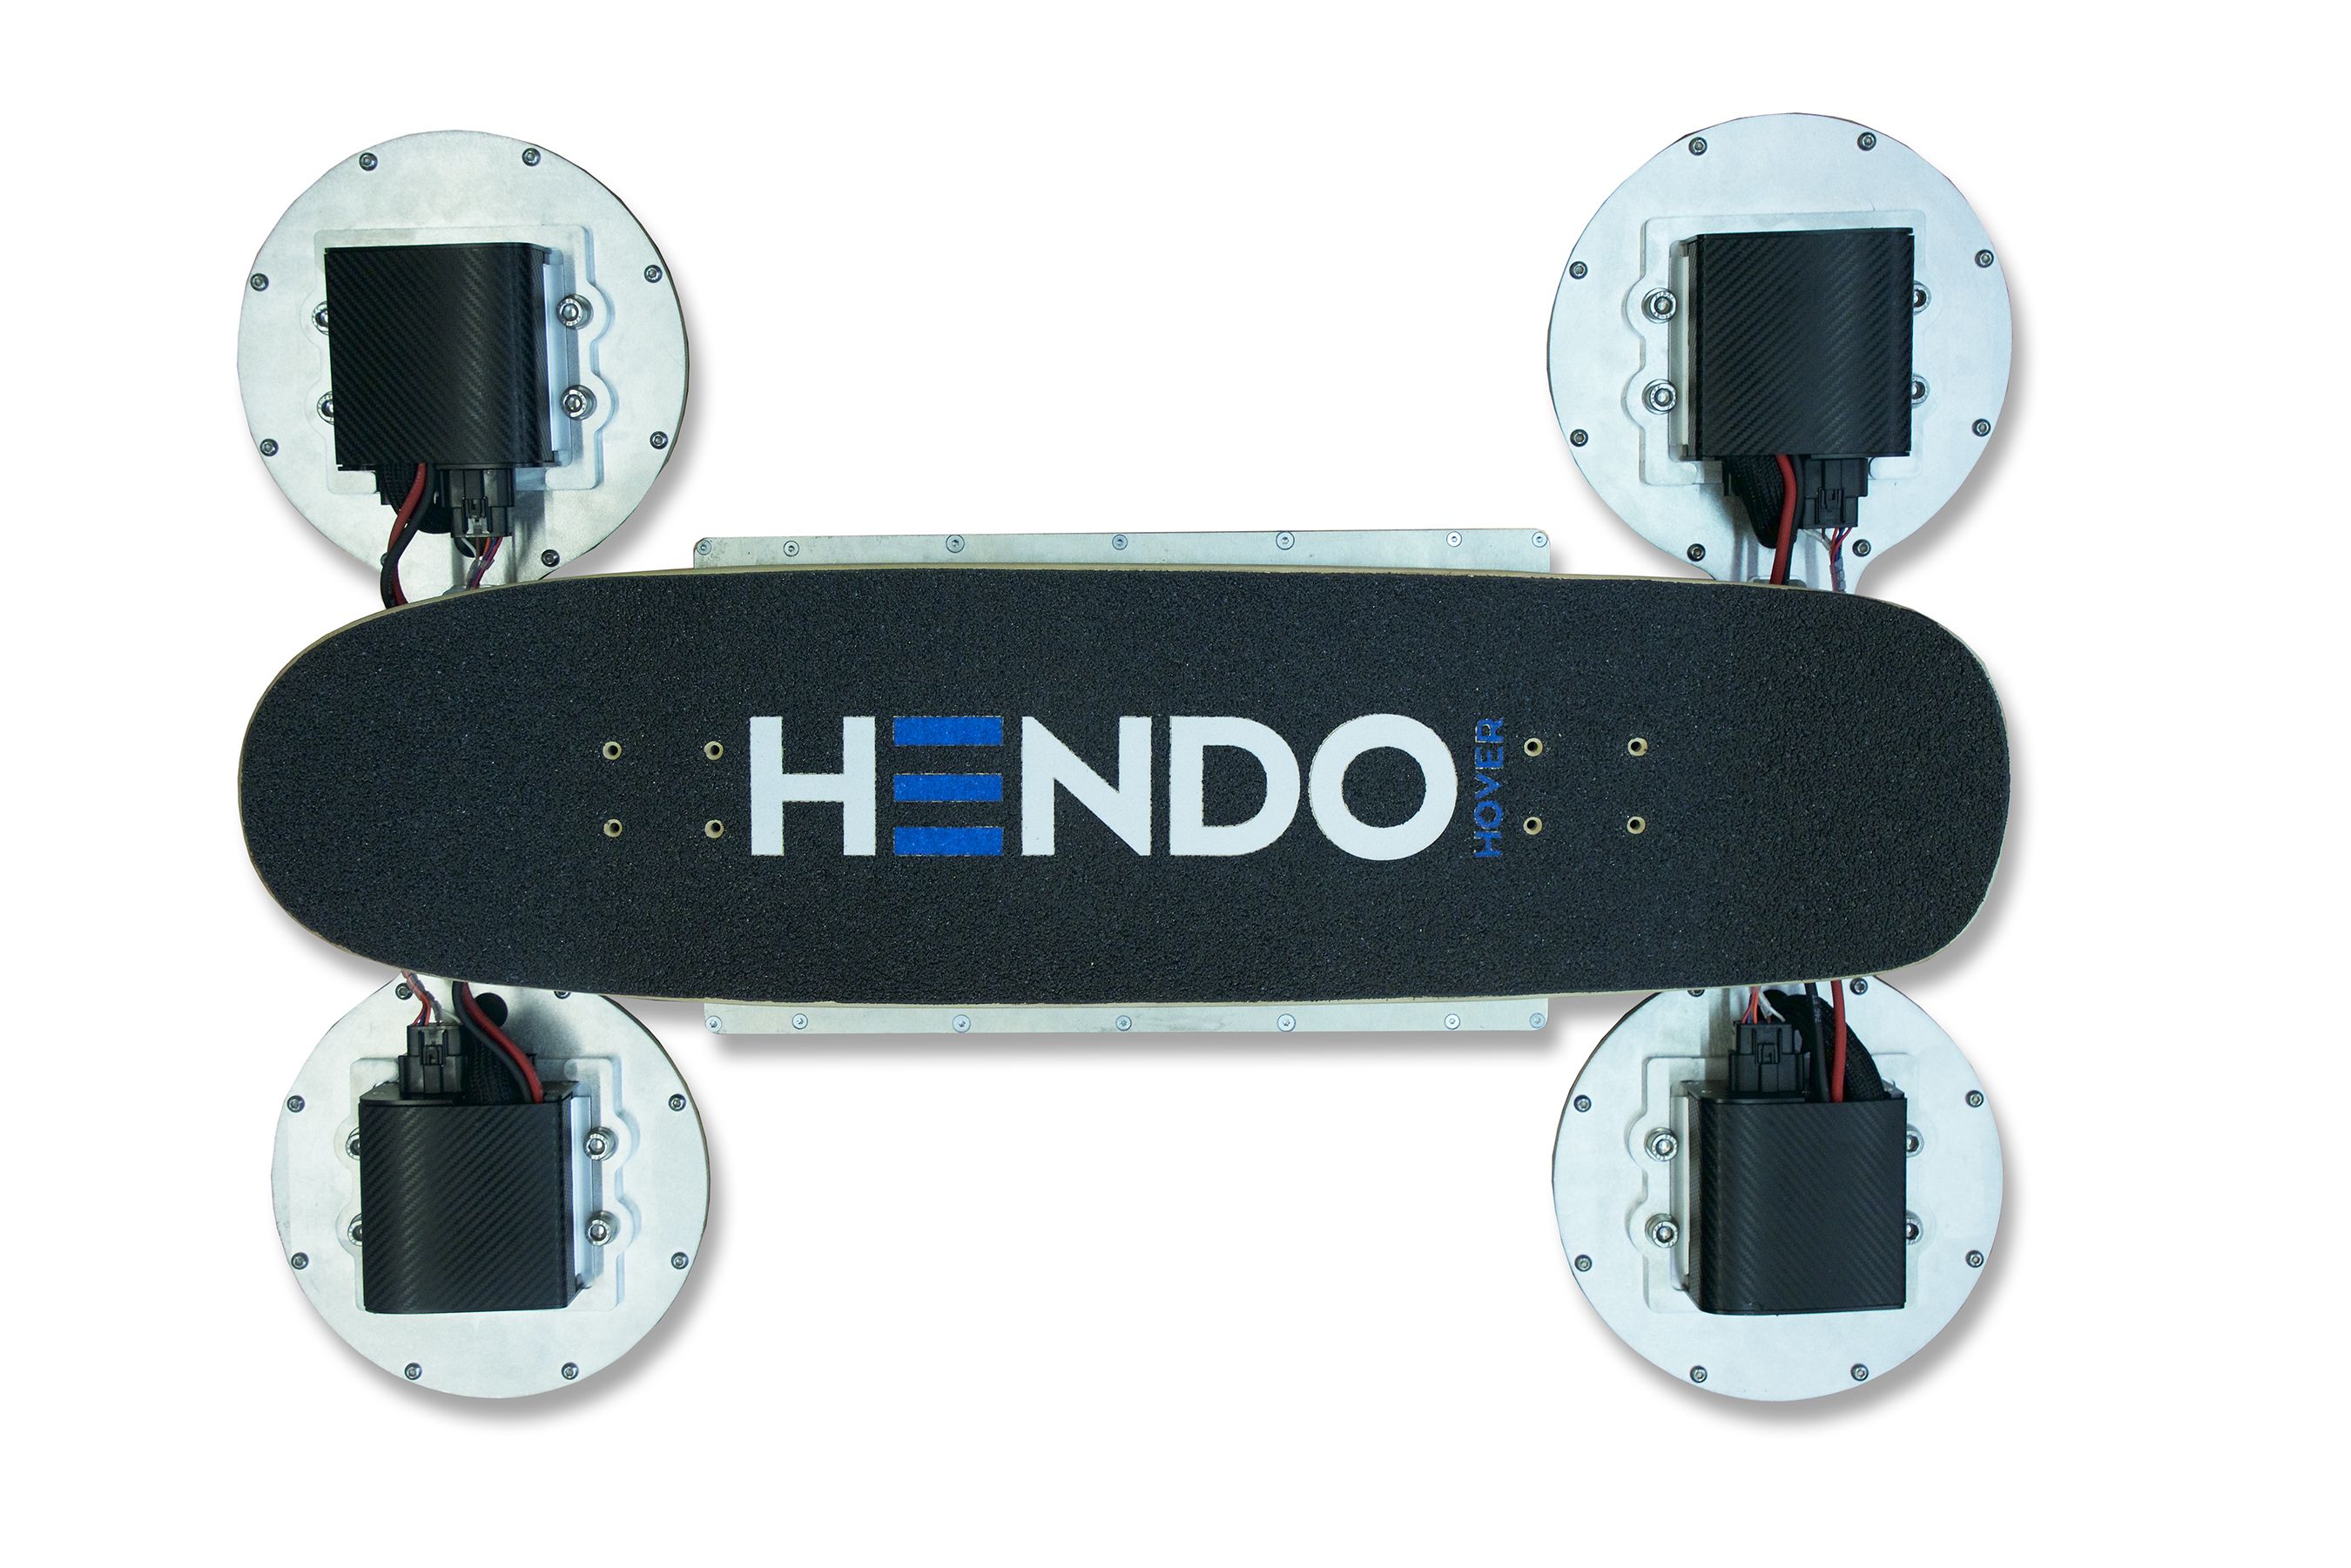 mode bus ugunstige Hendo 2.0: the hoverboard that Tony Hawk helped design | CNN Business